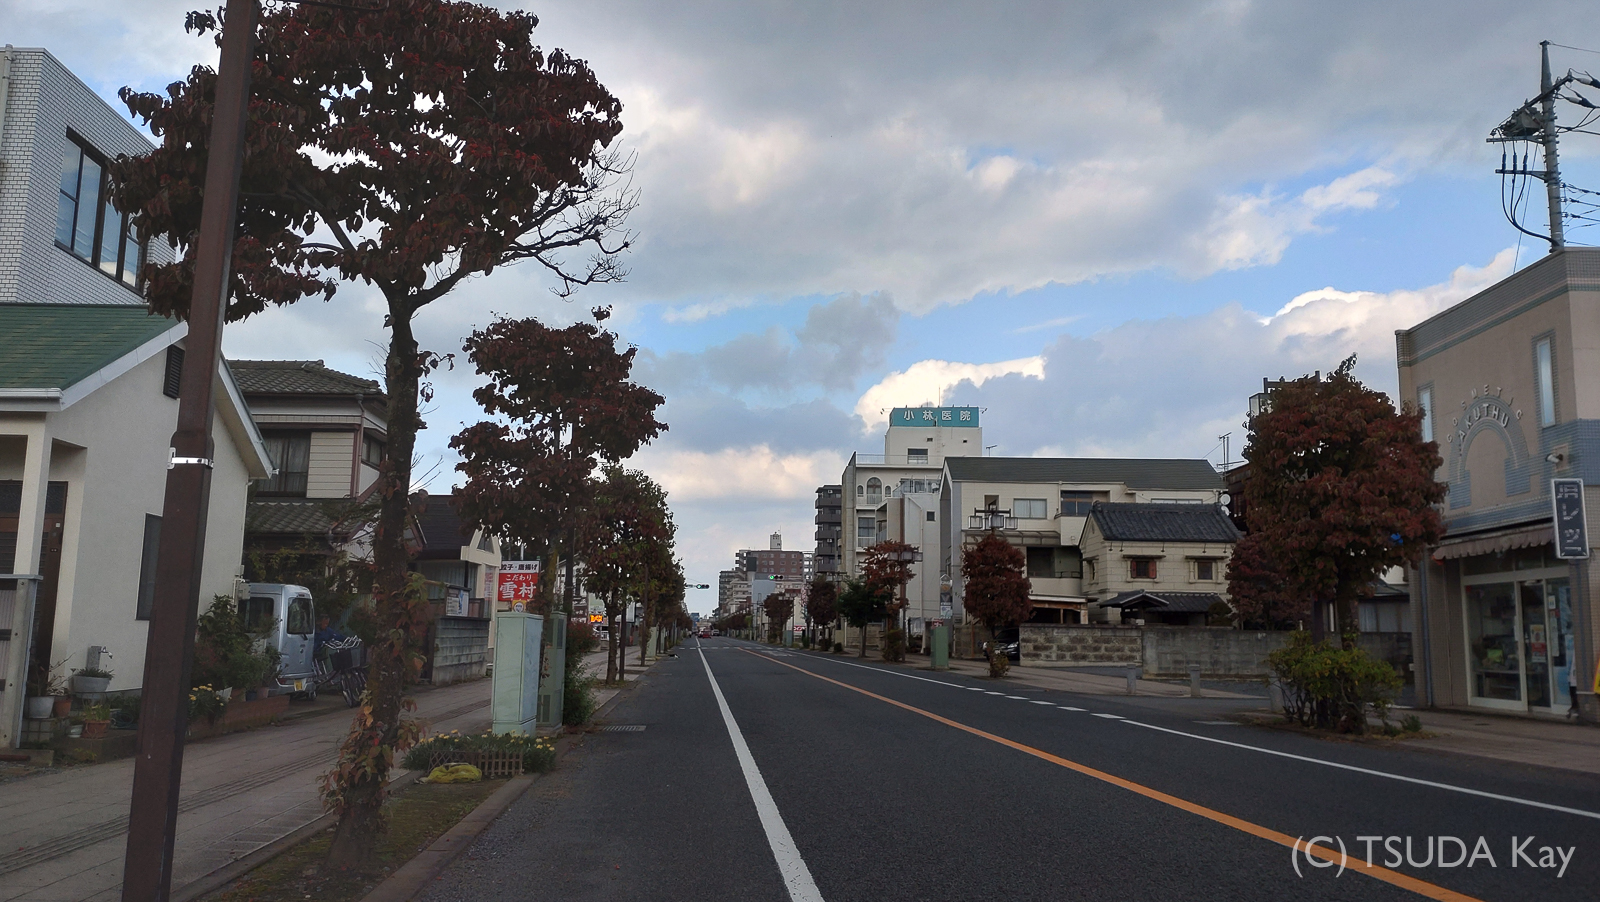 I cycled old nikko road 40